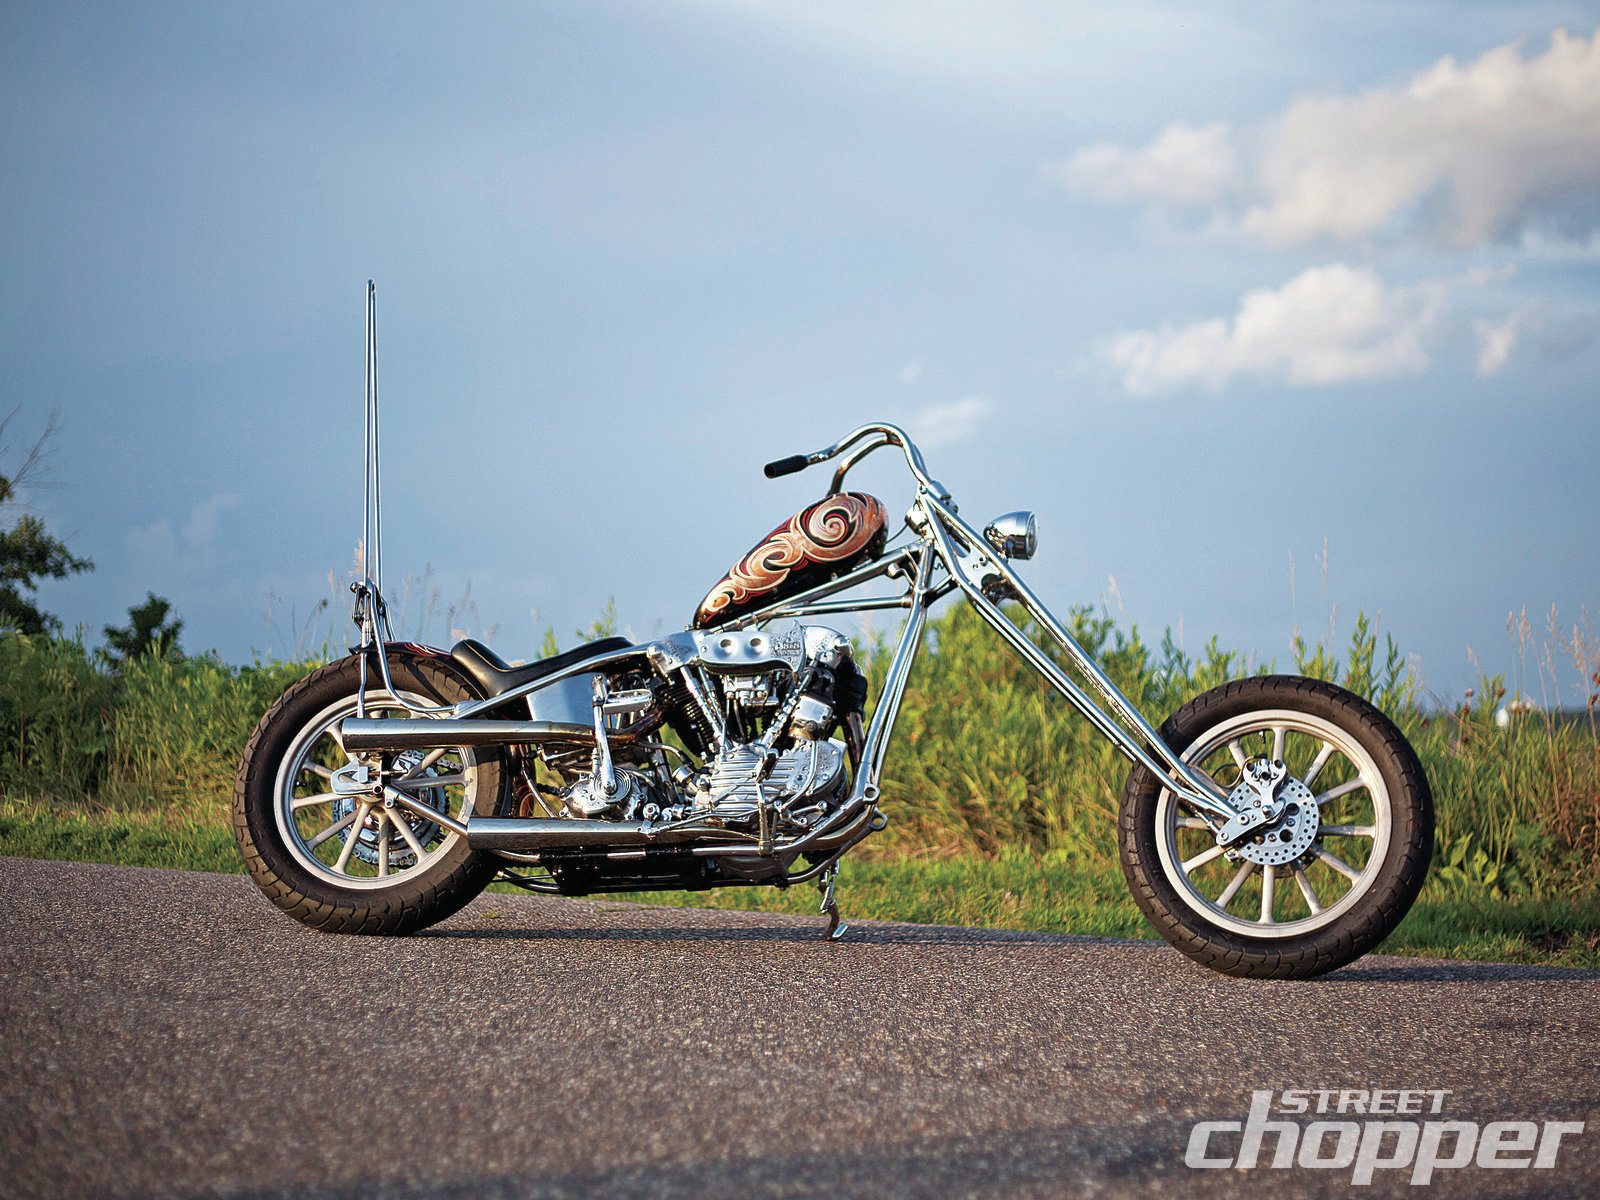 vehicles, chopper, motorcycle Image for desktop